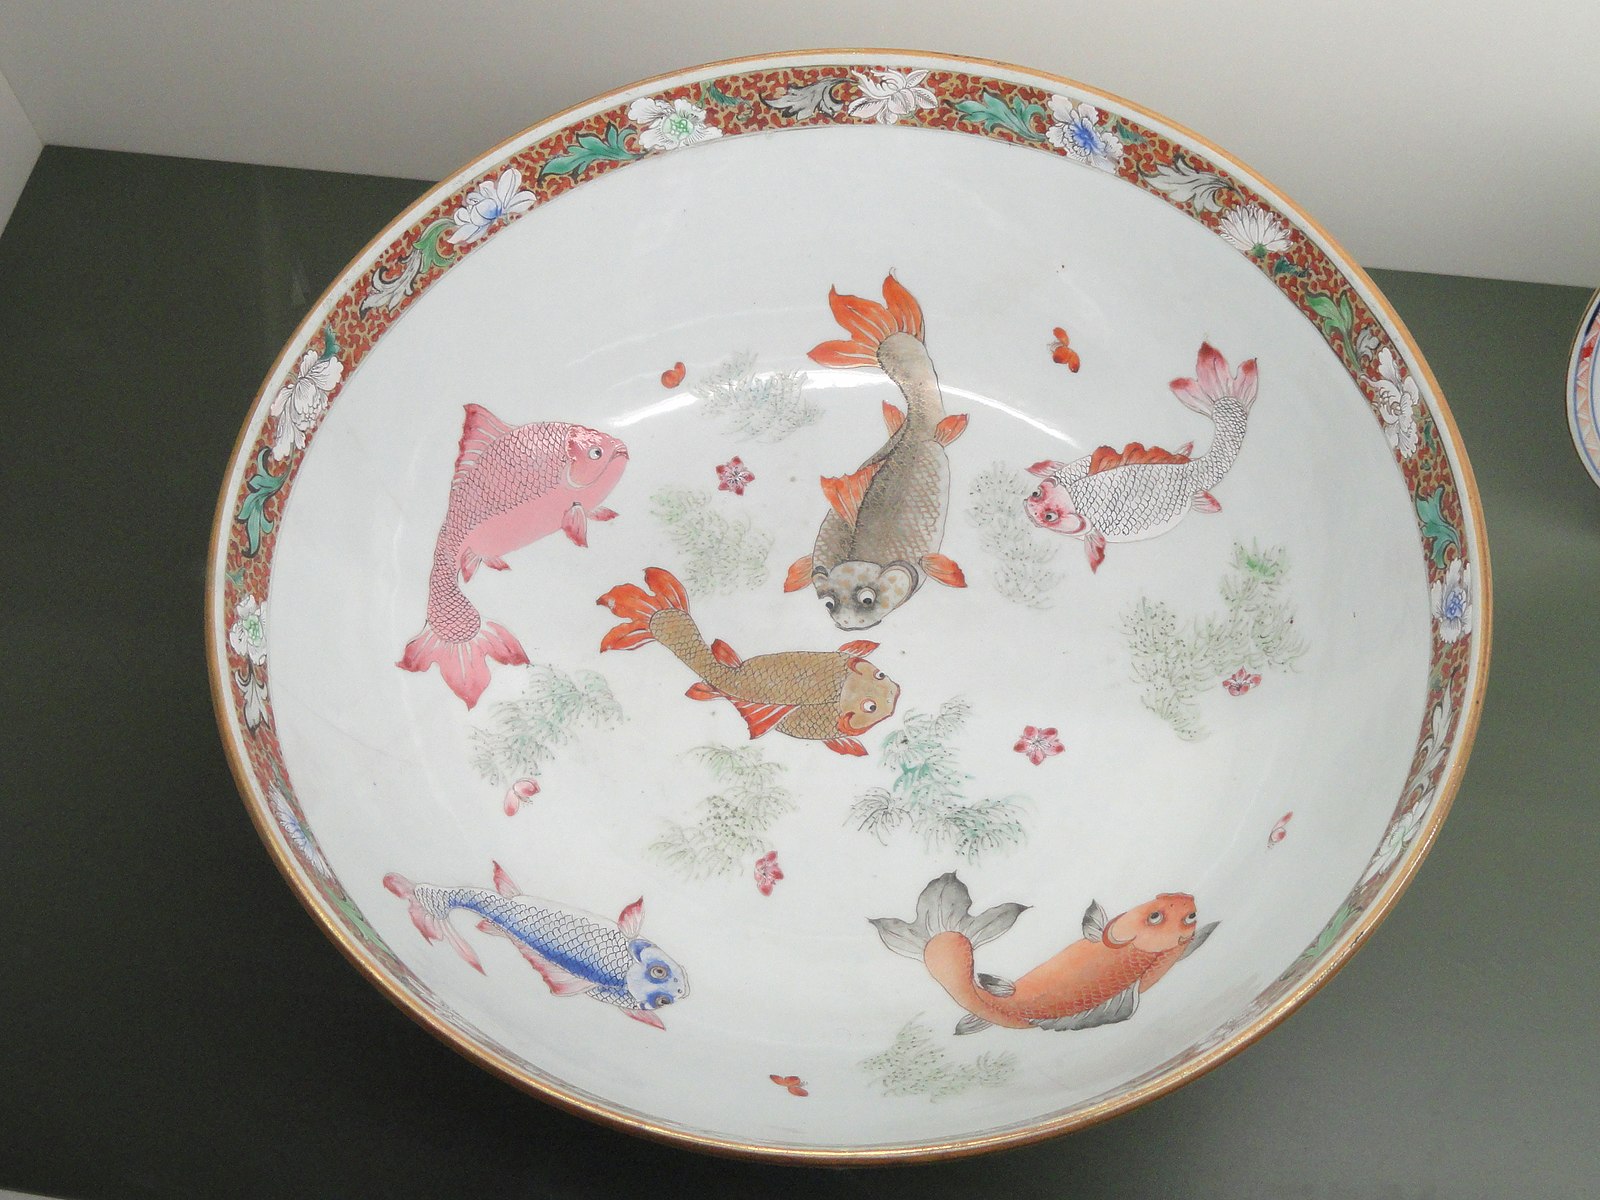 Ming porcelain platter painted carp in various colors